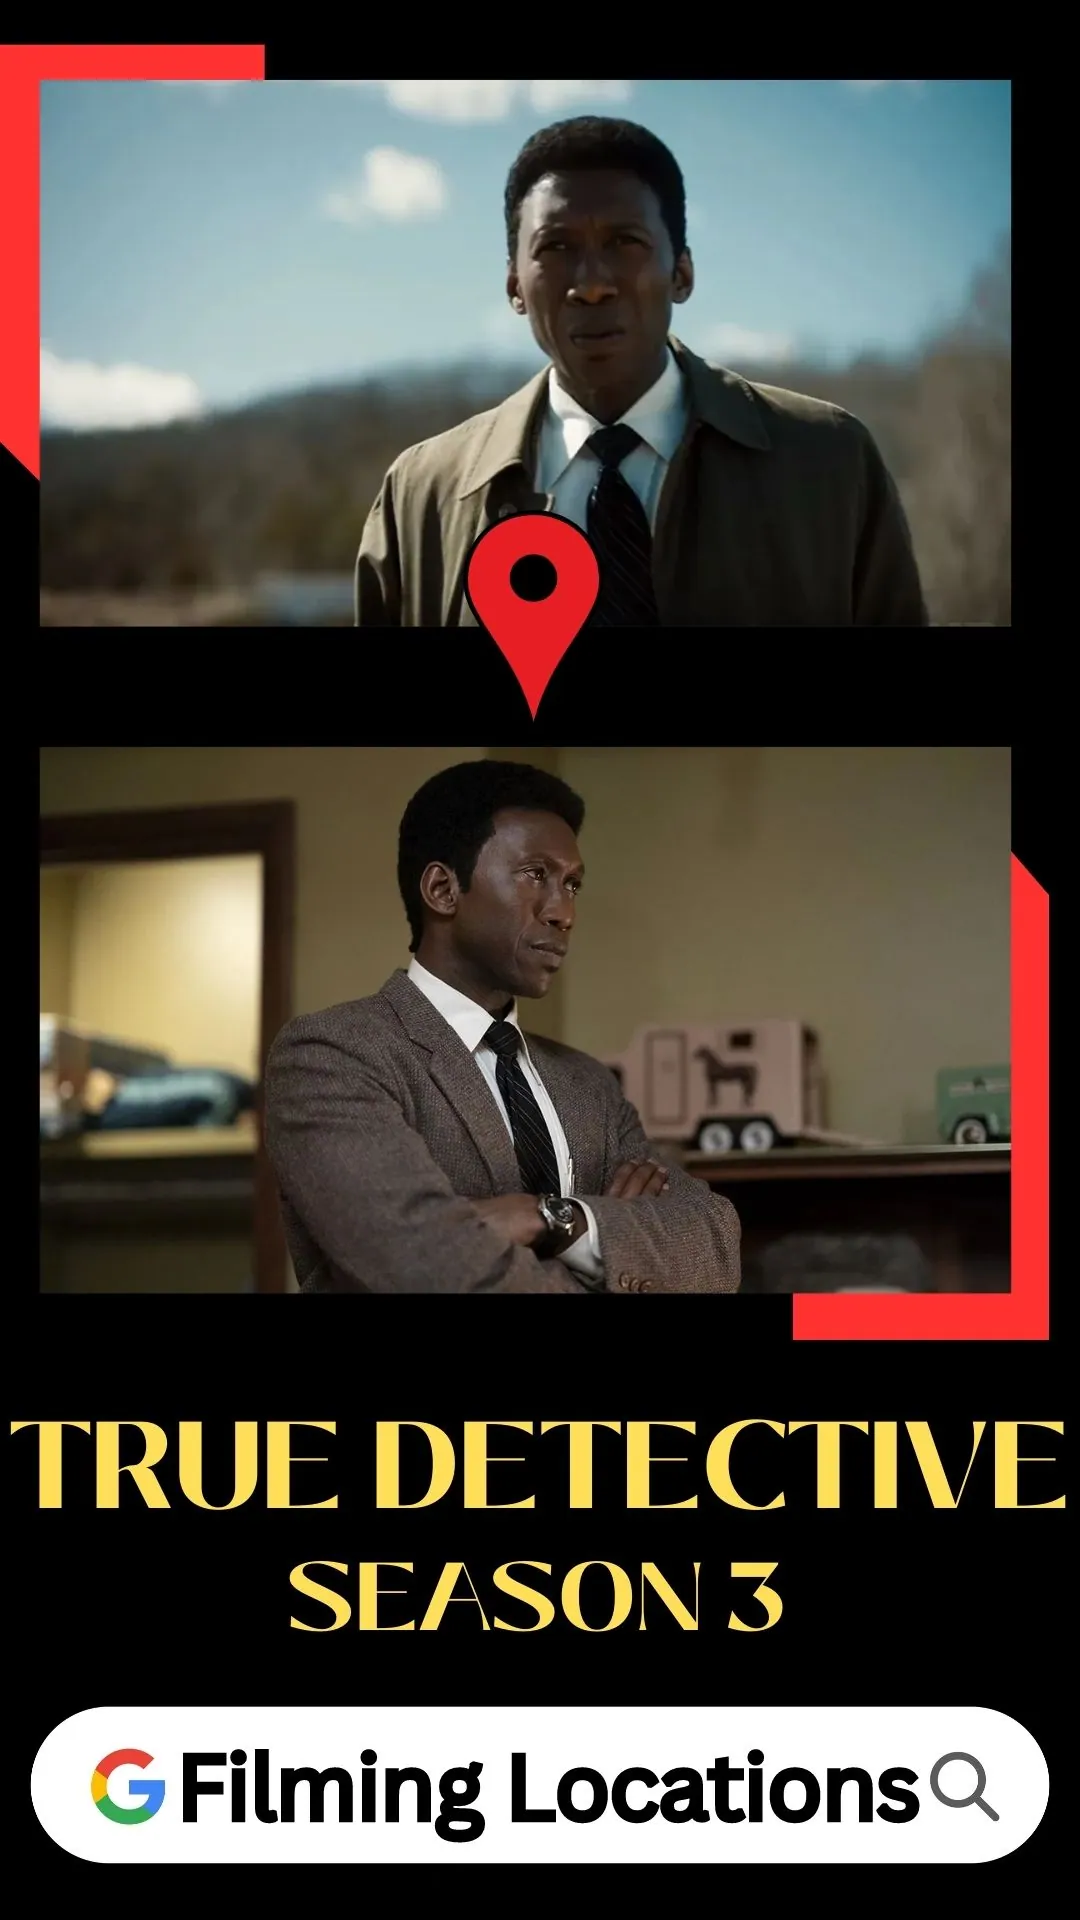 True Detective Season 3 Filming Locations (2019)